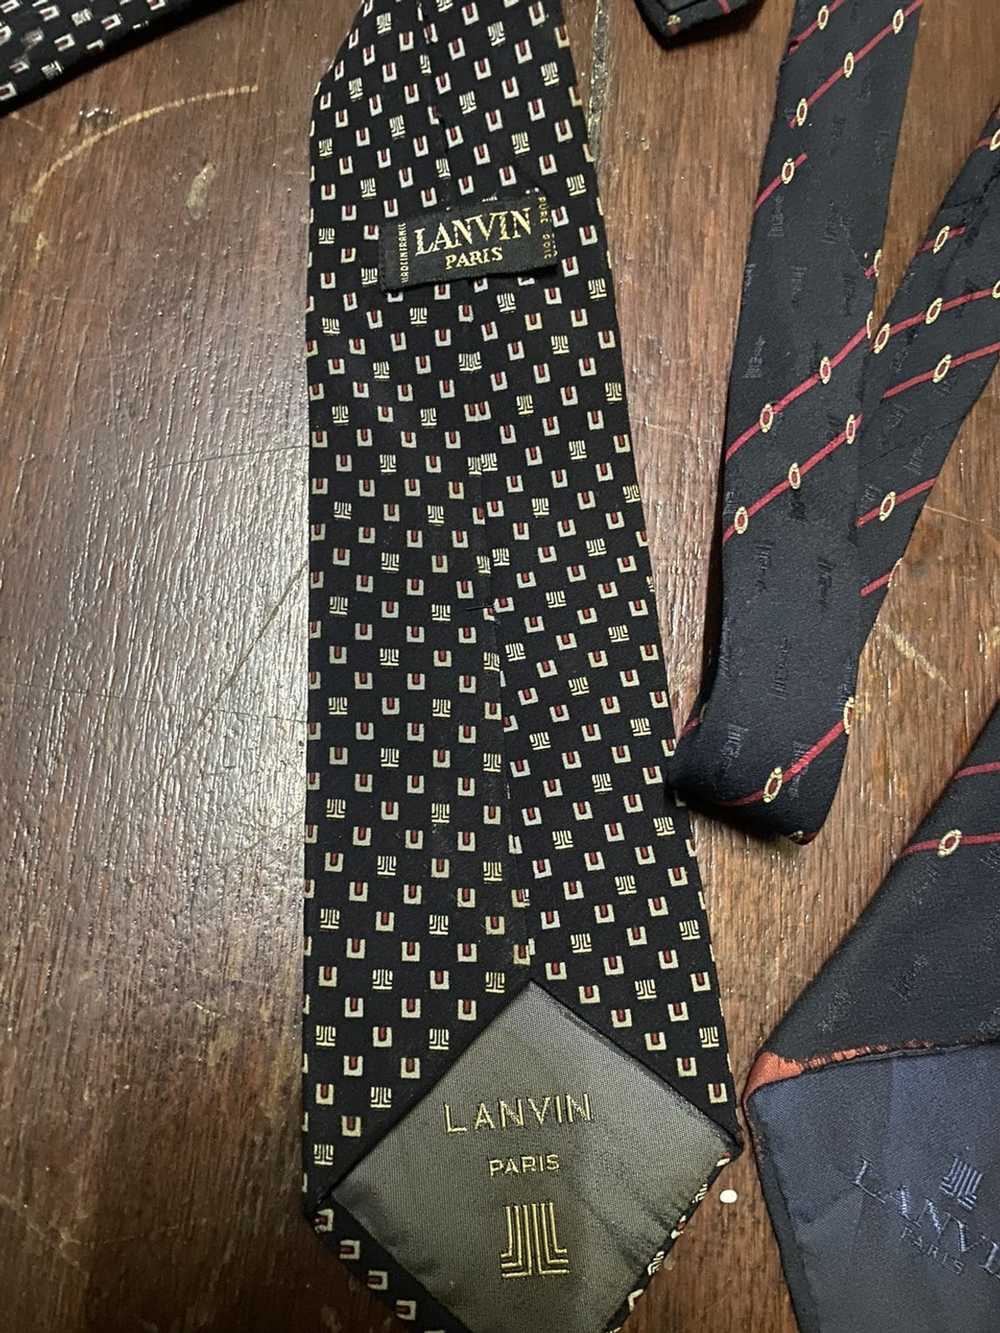 Lanvin × Luxury 💥Combo💥 lanvin Paris ties - image 4